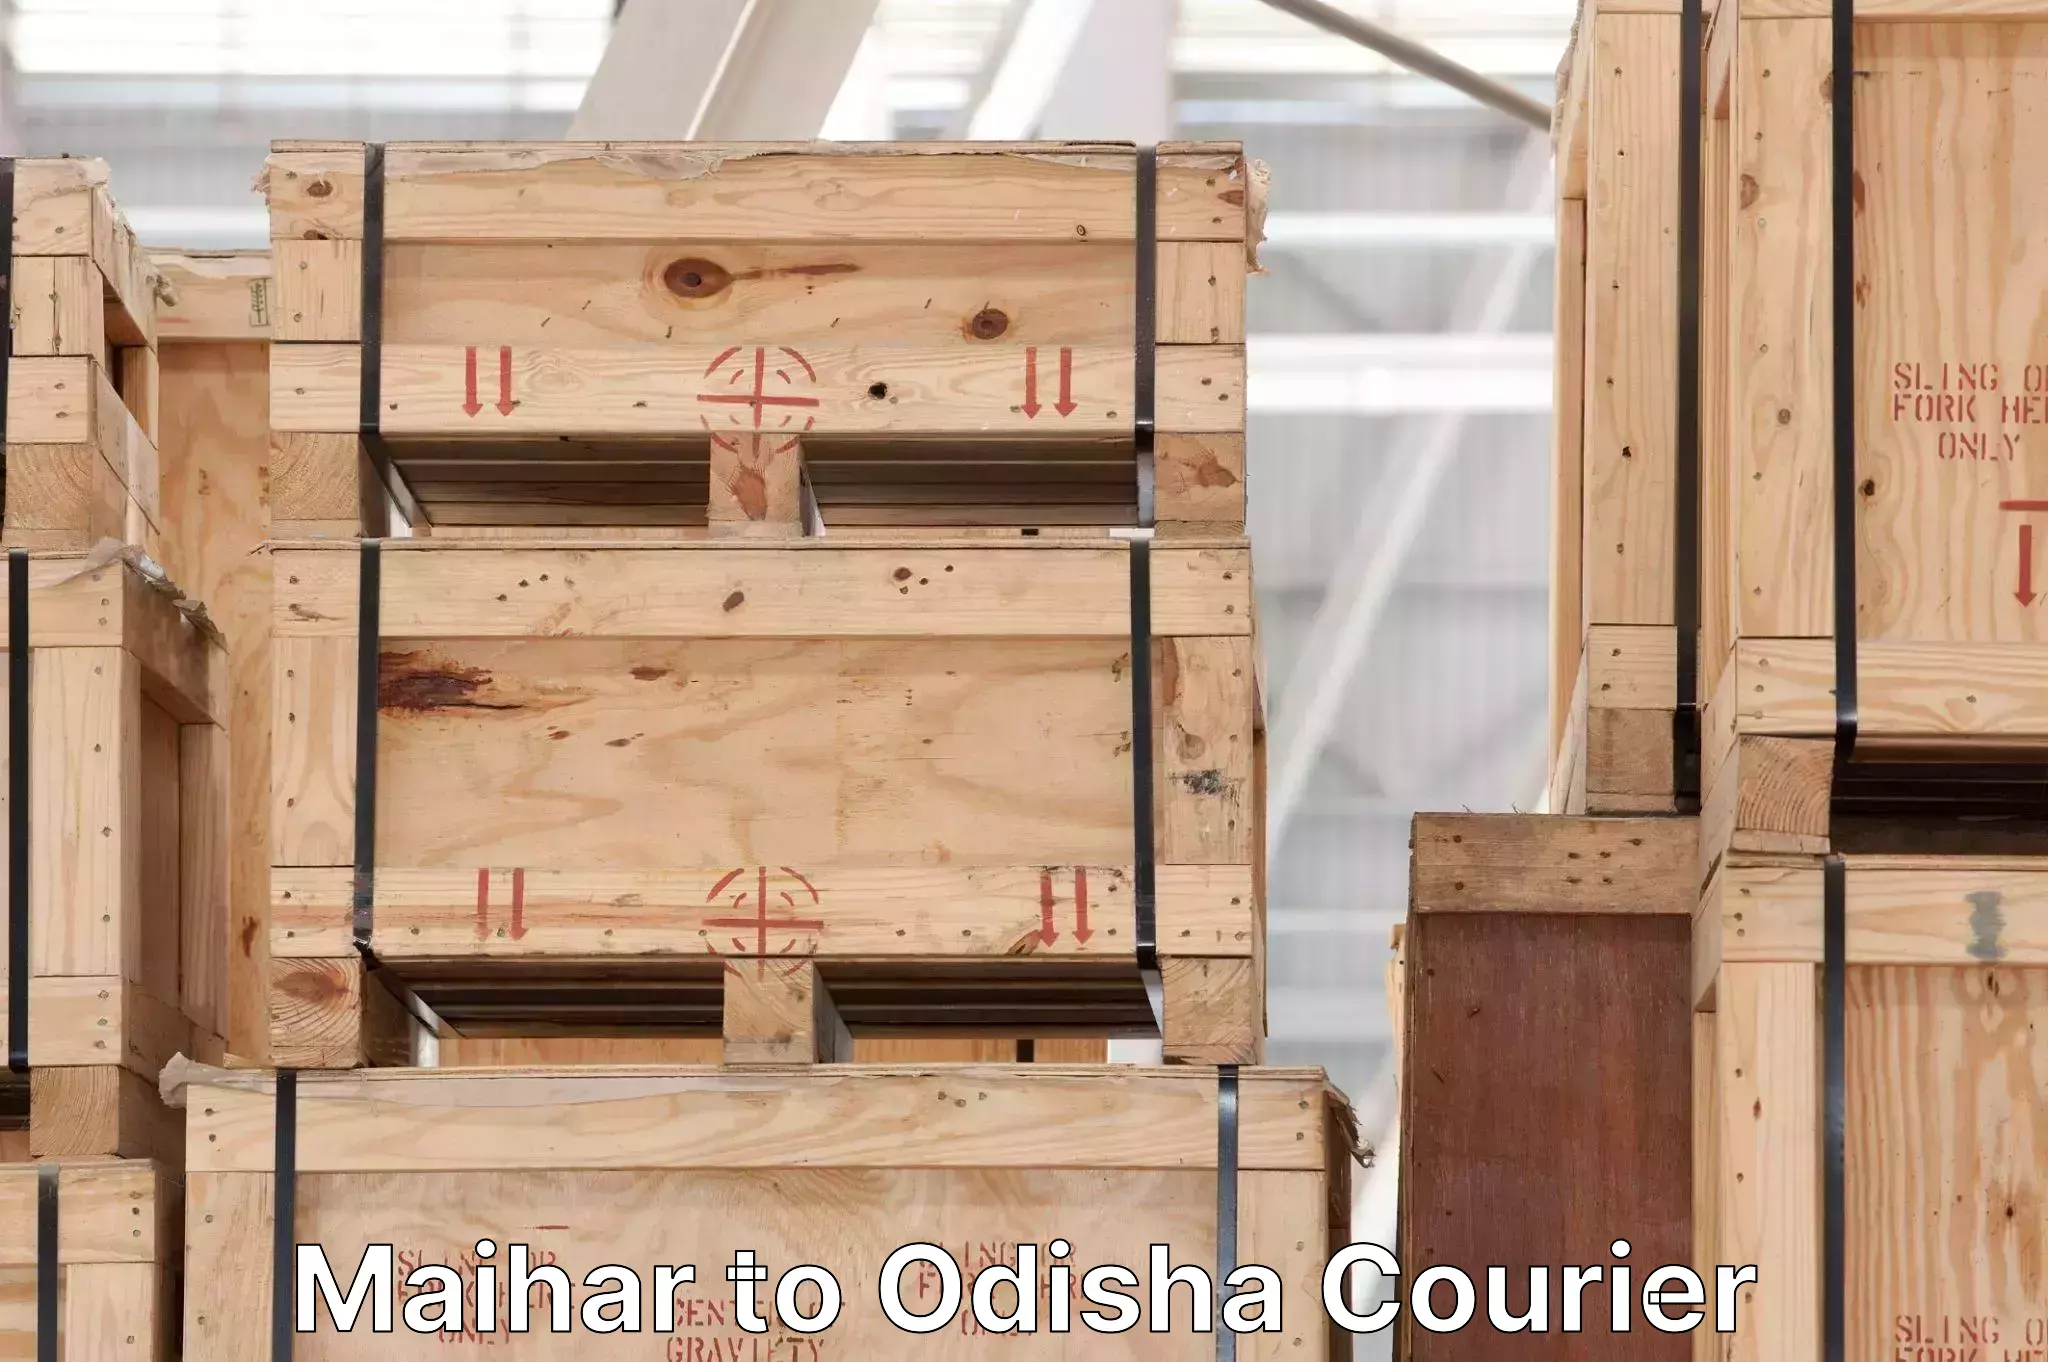 Courier service comparison Maihar to Odisha